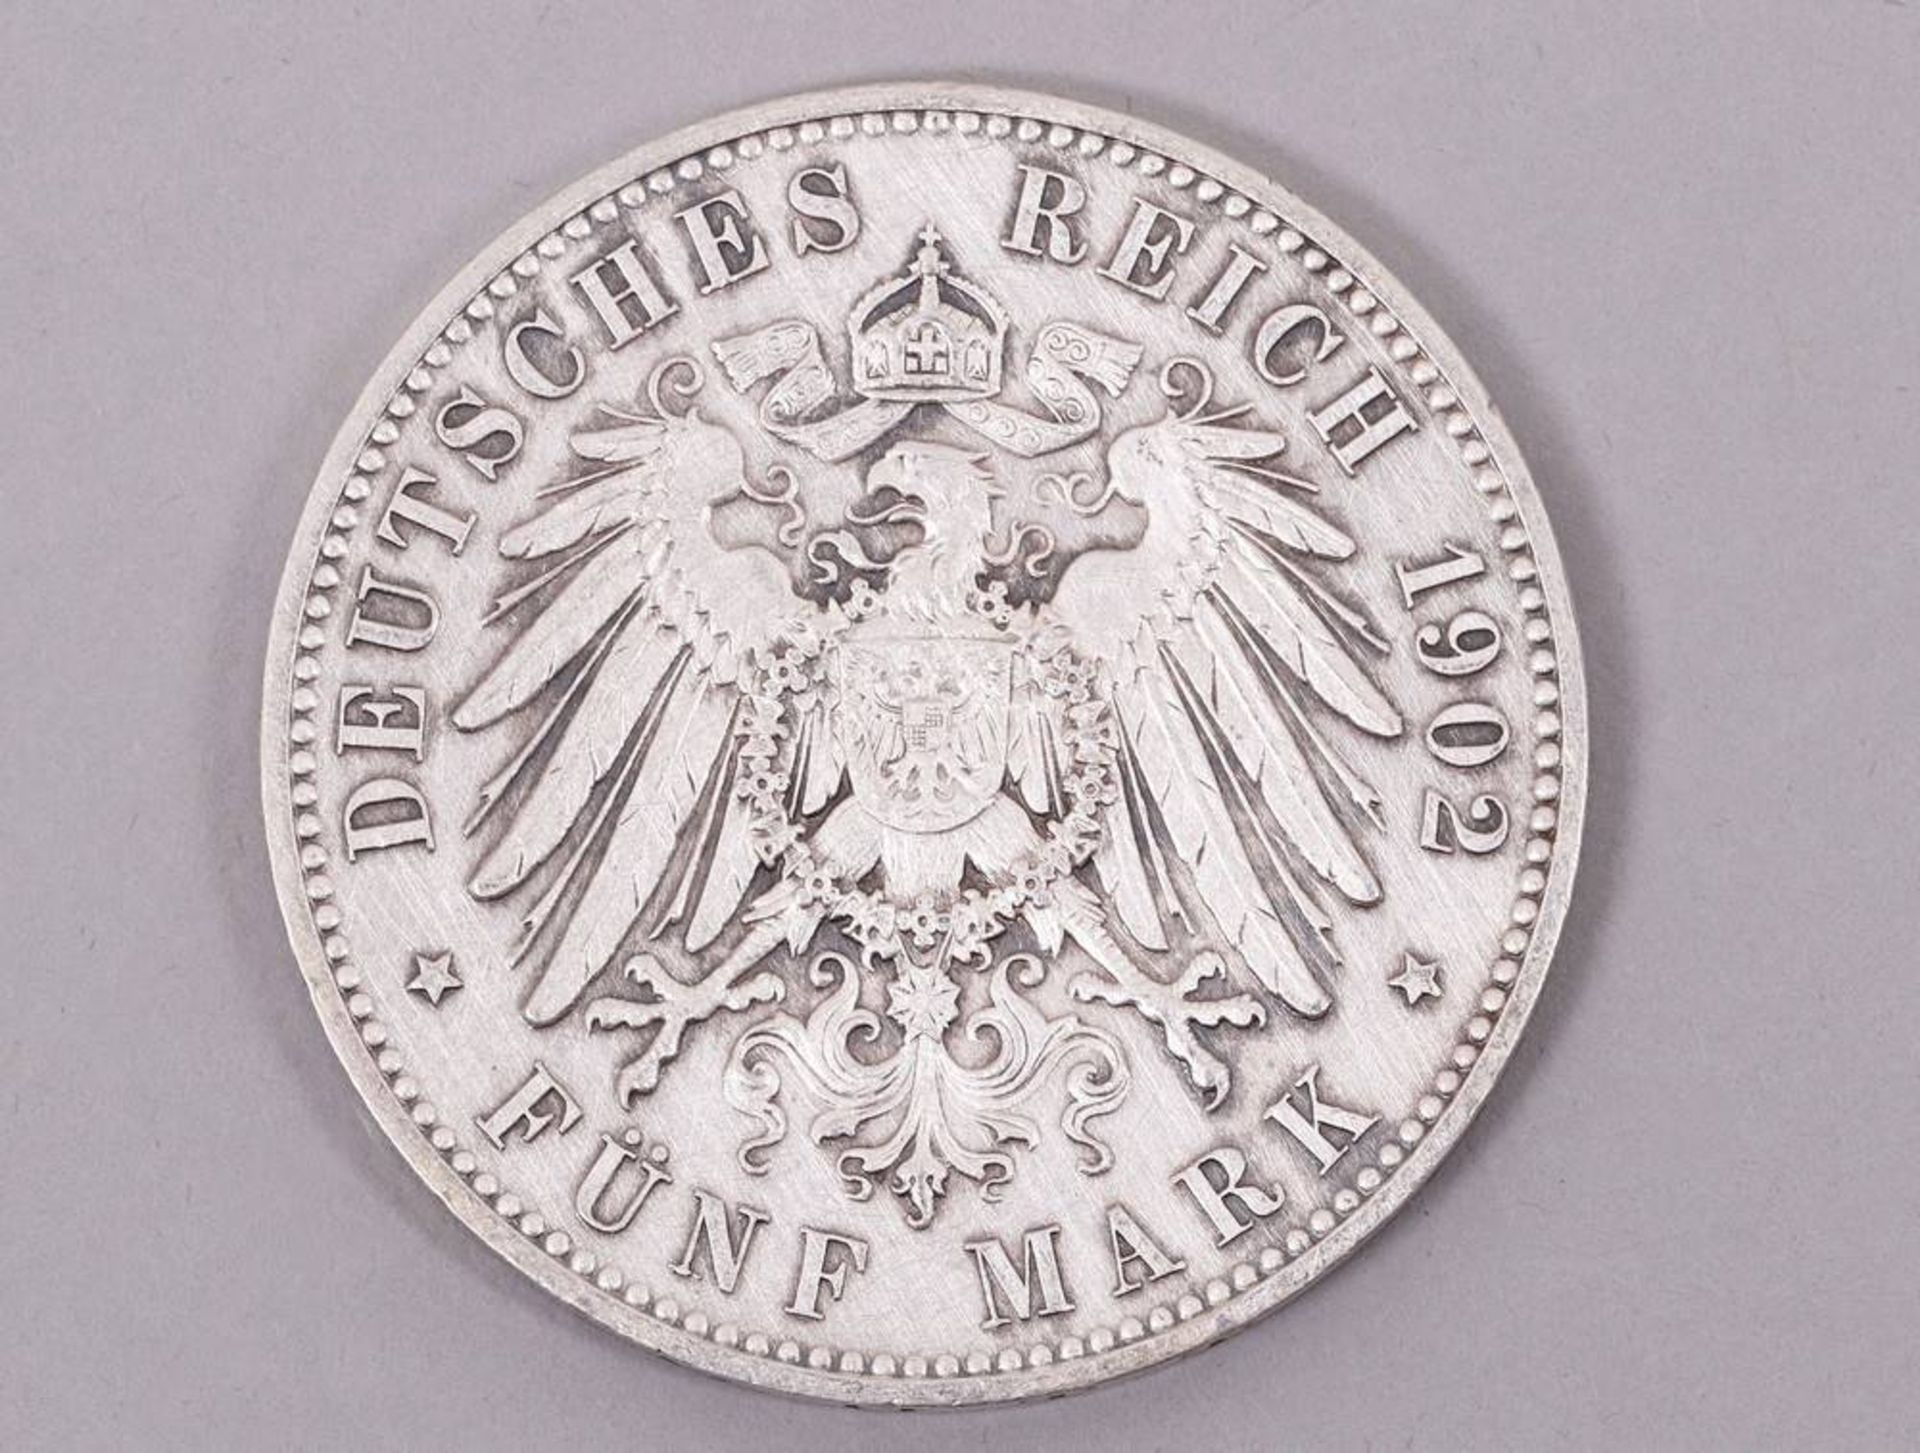 Saxony 5 Mark, 1902 E - Image 2 of 2